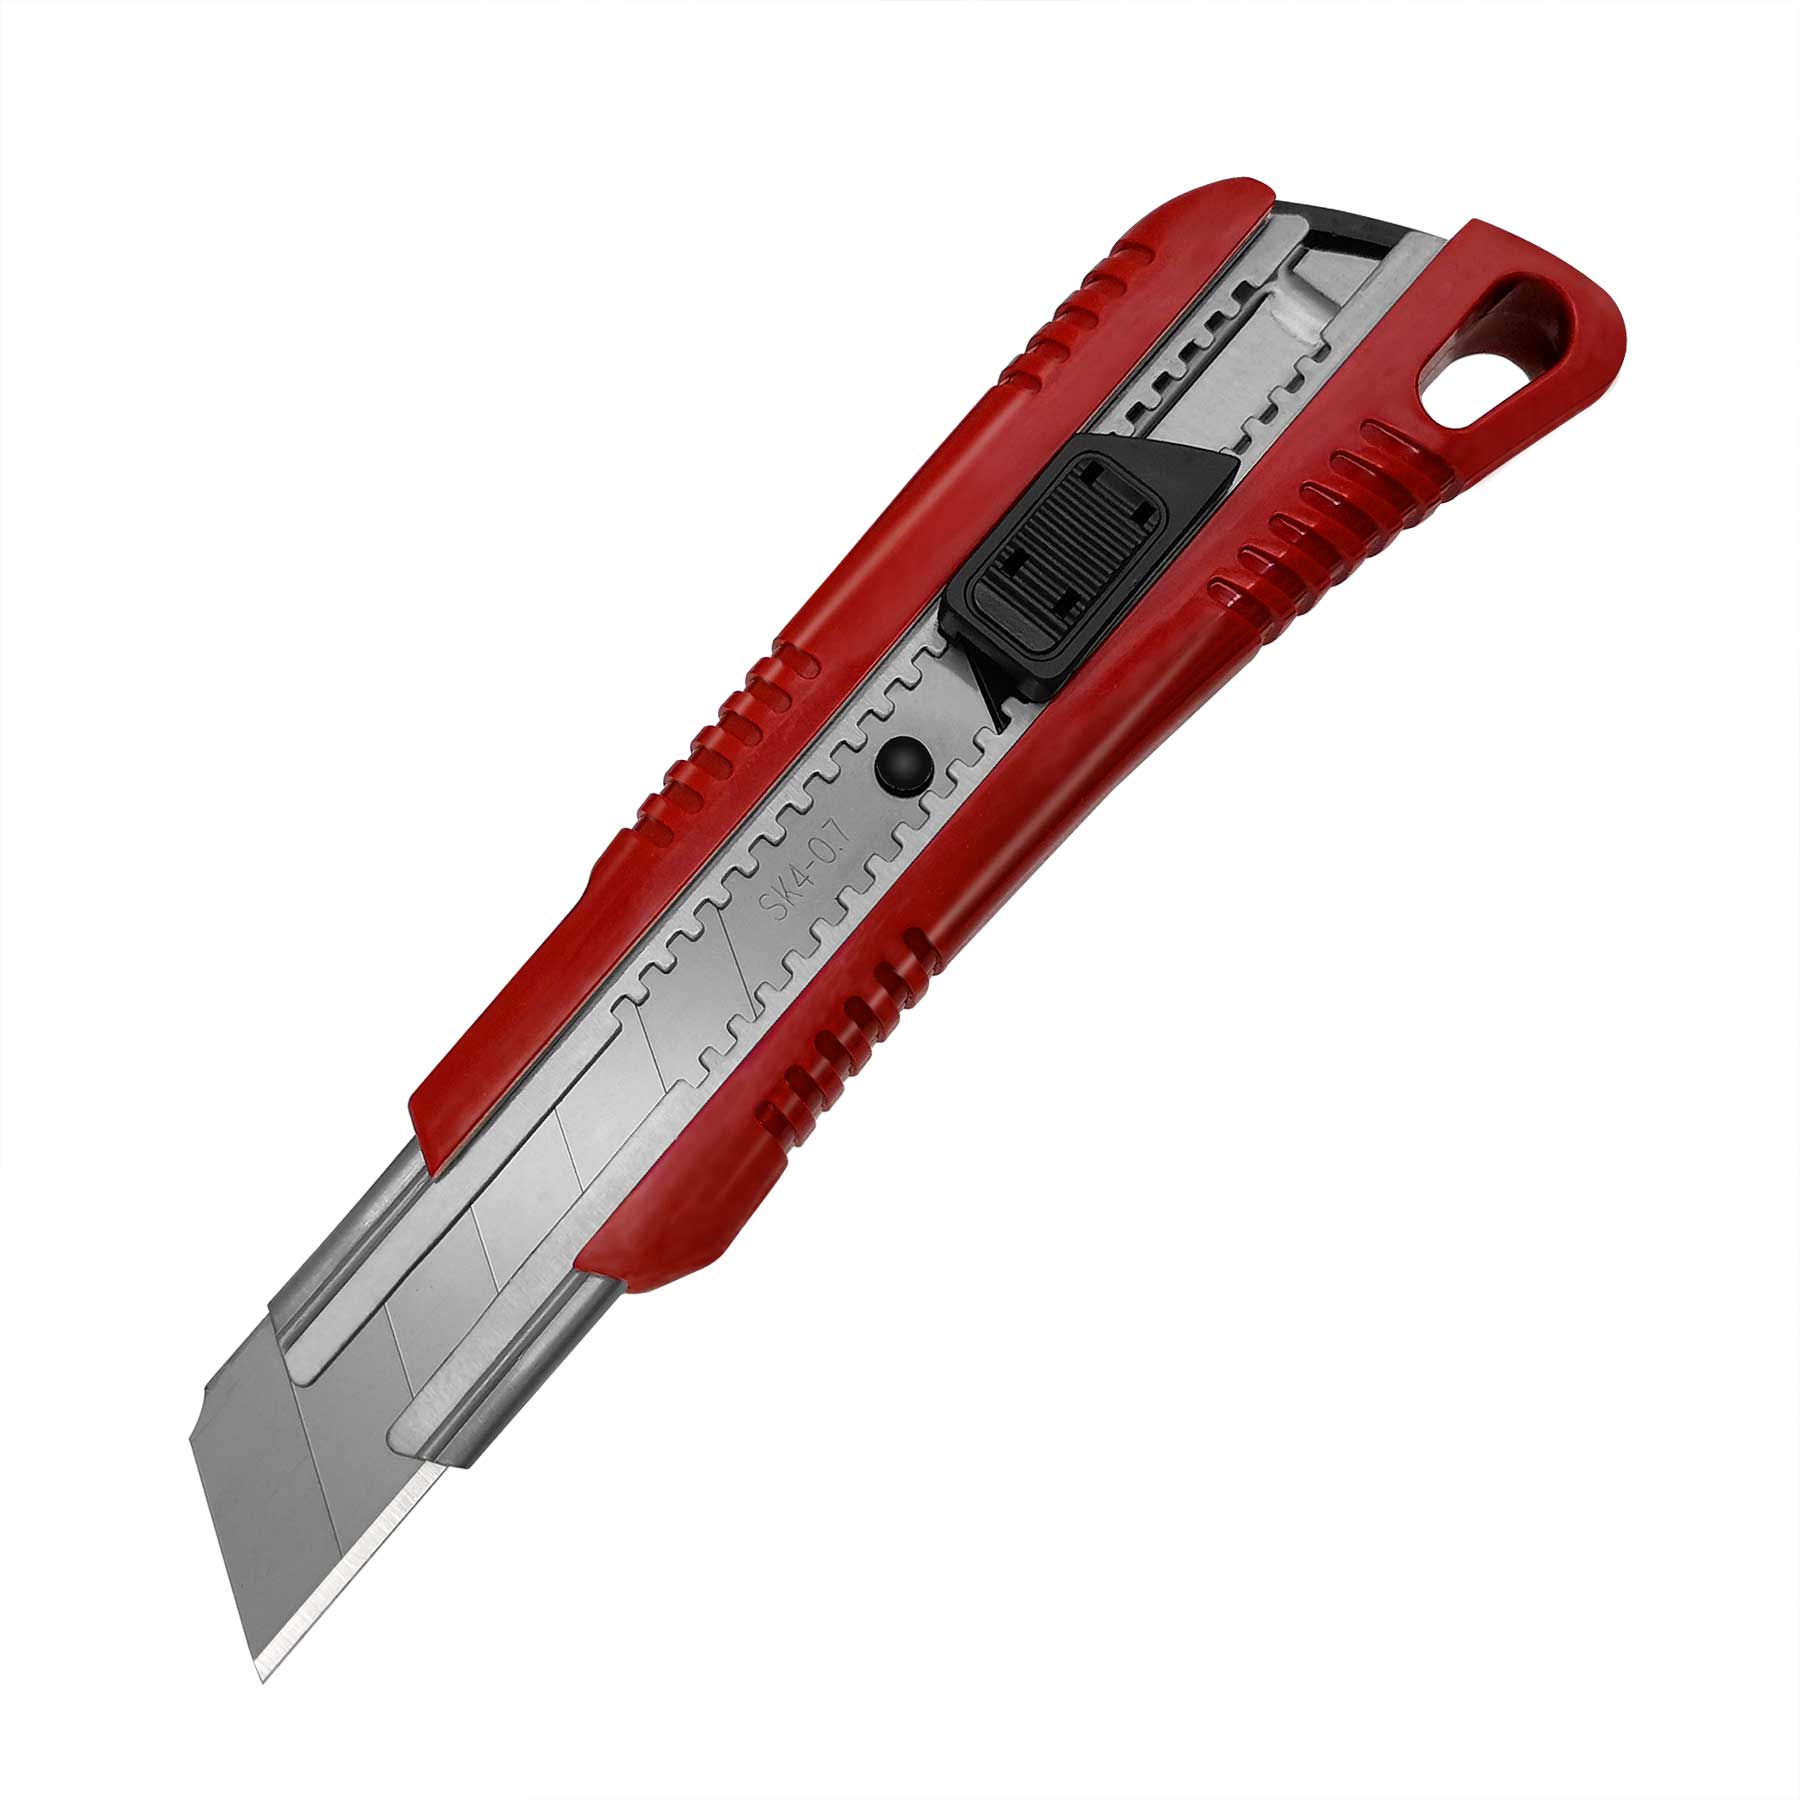 TacklePro 4 Bait Knife with Sheath - Blister Pack - TGA Abrasives